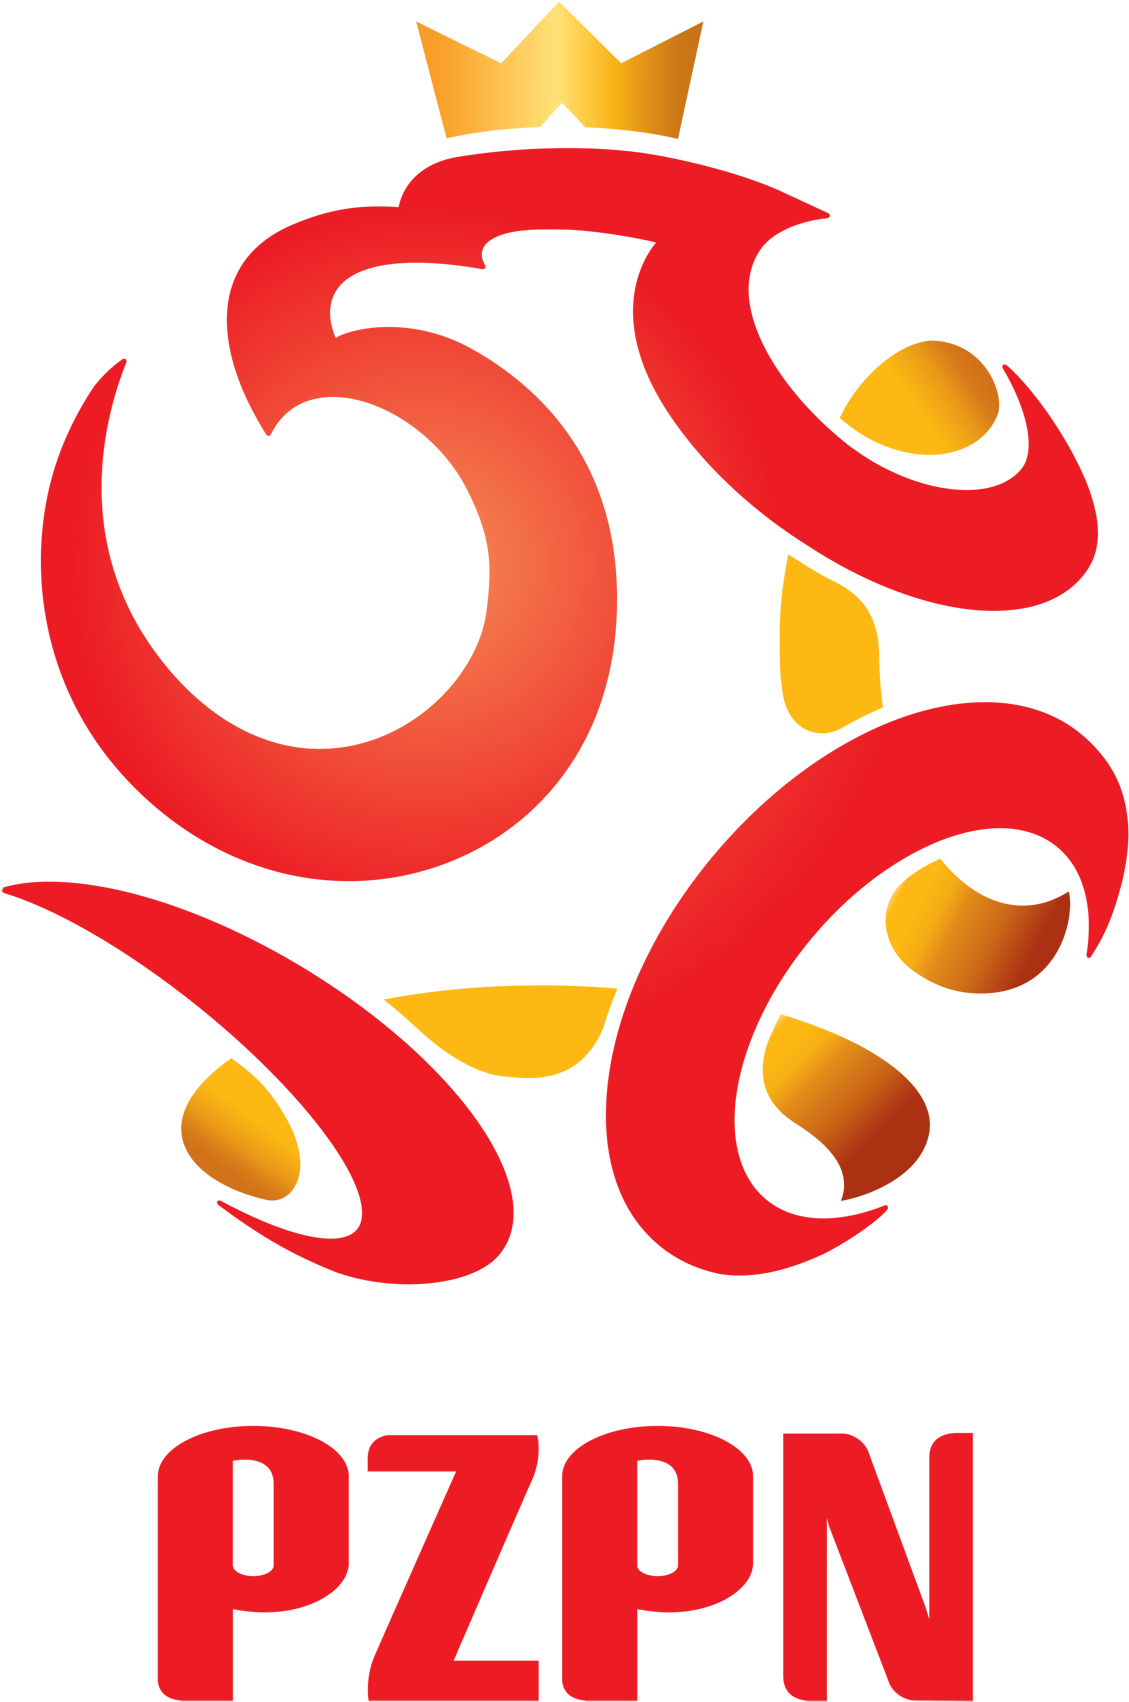 Pzpn Logo - Polish Football Association (2272x1704)